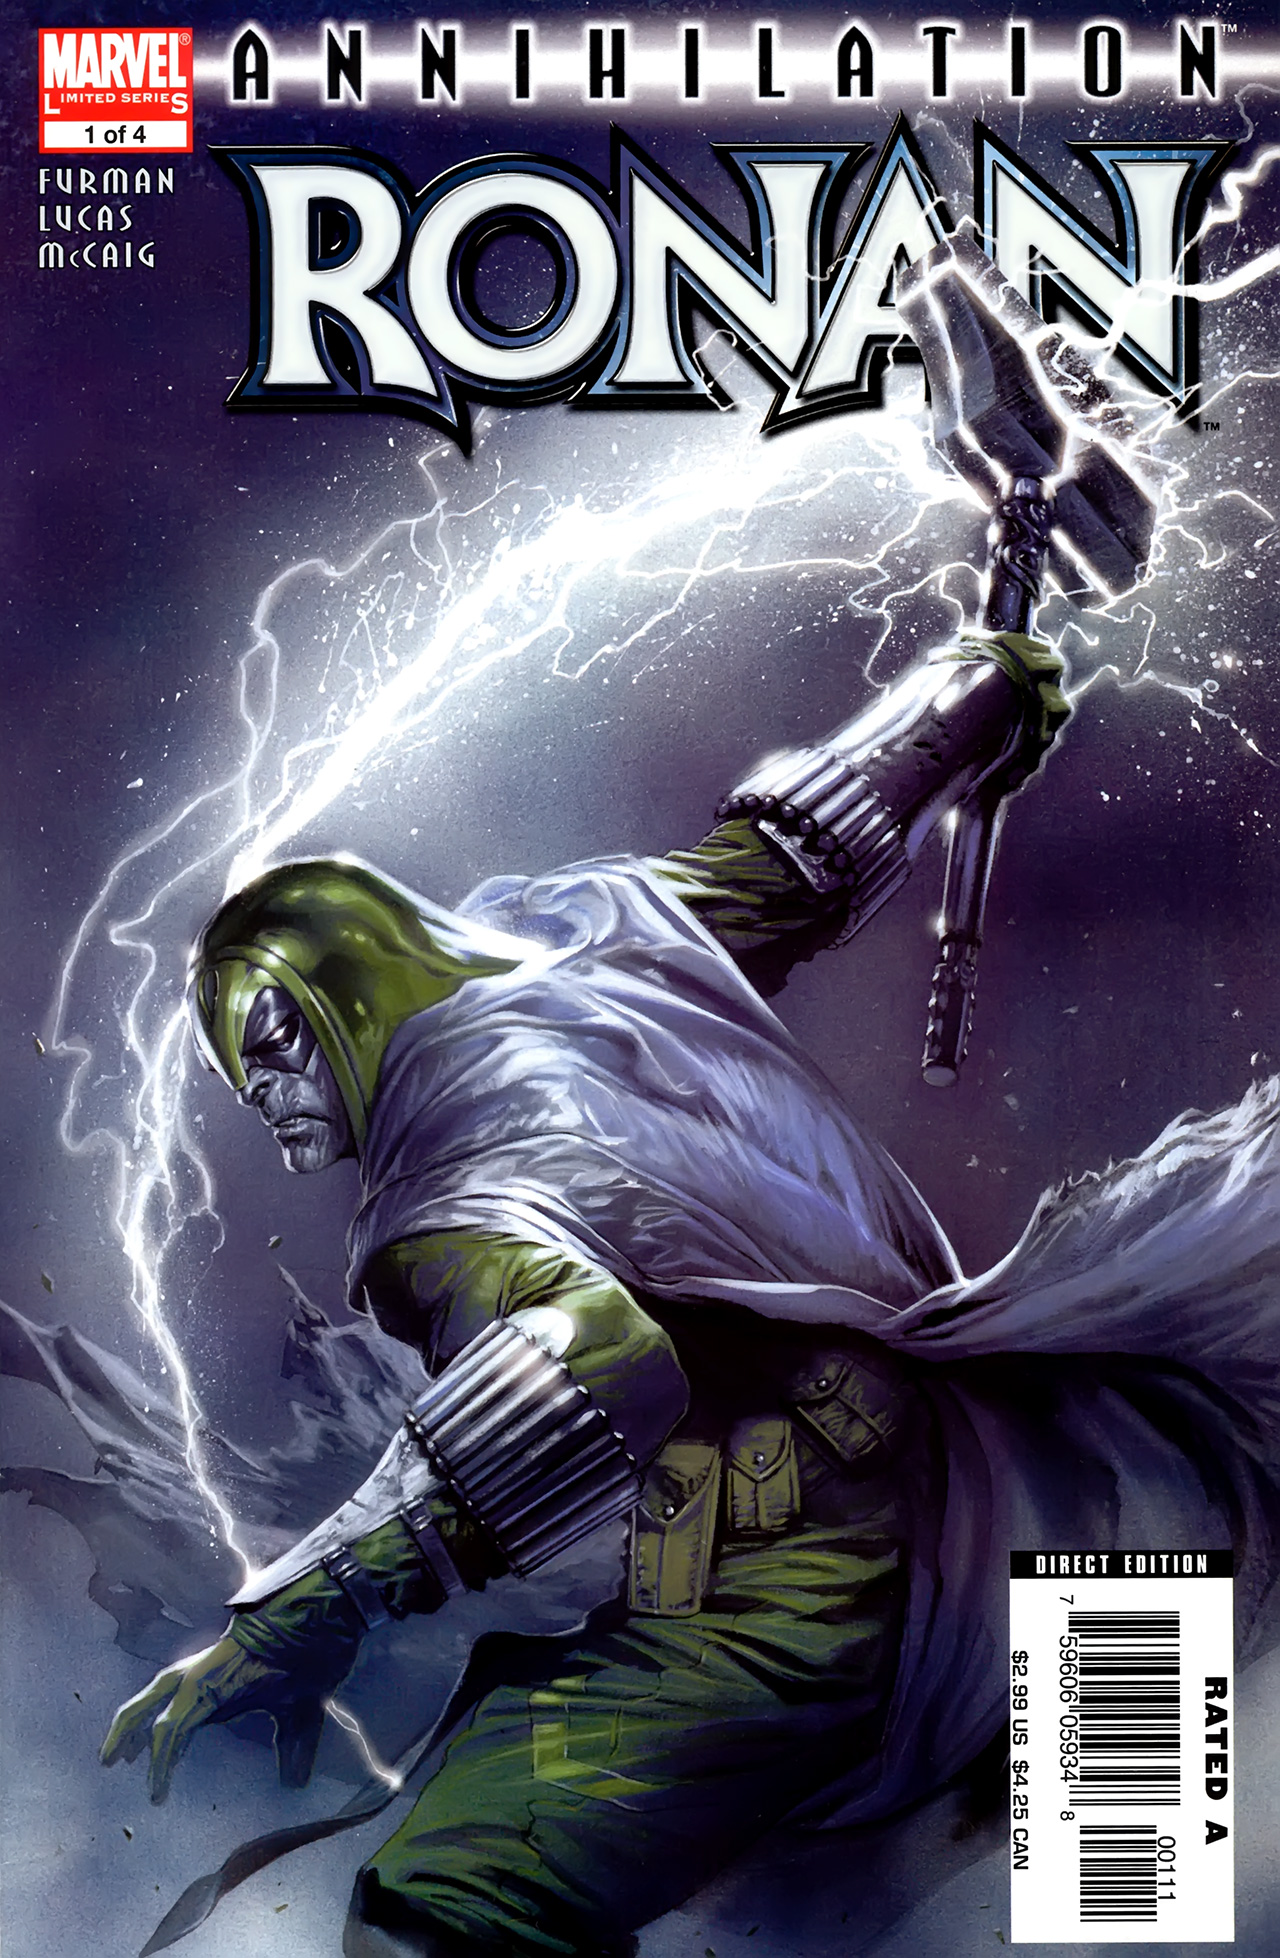 Read online Annihilation: Ronan comic -  Issue #1 - 1